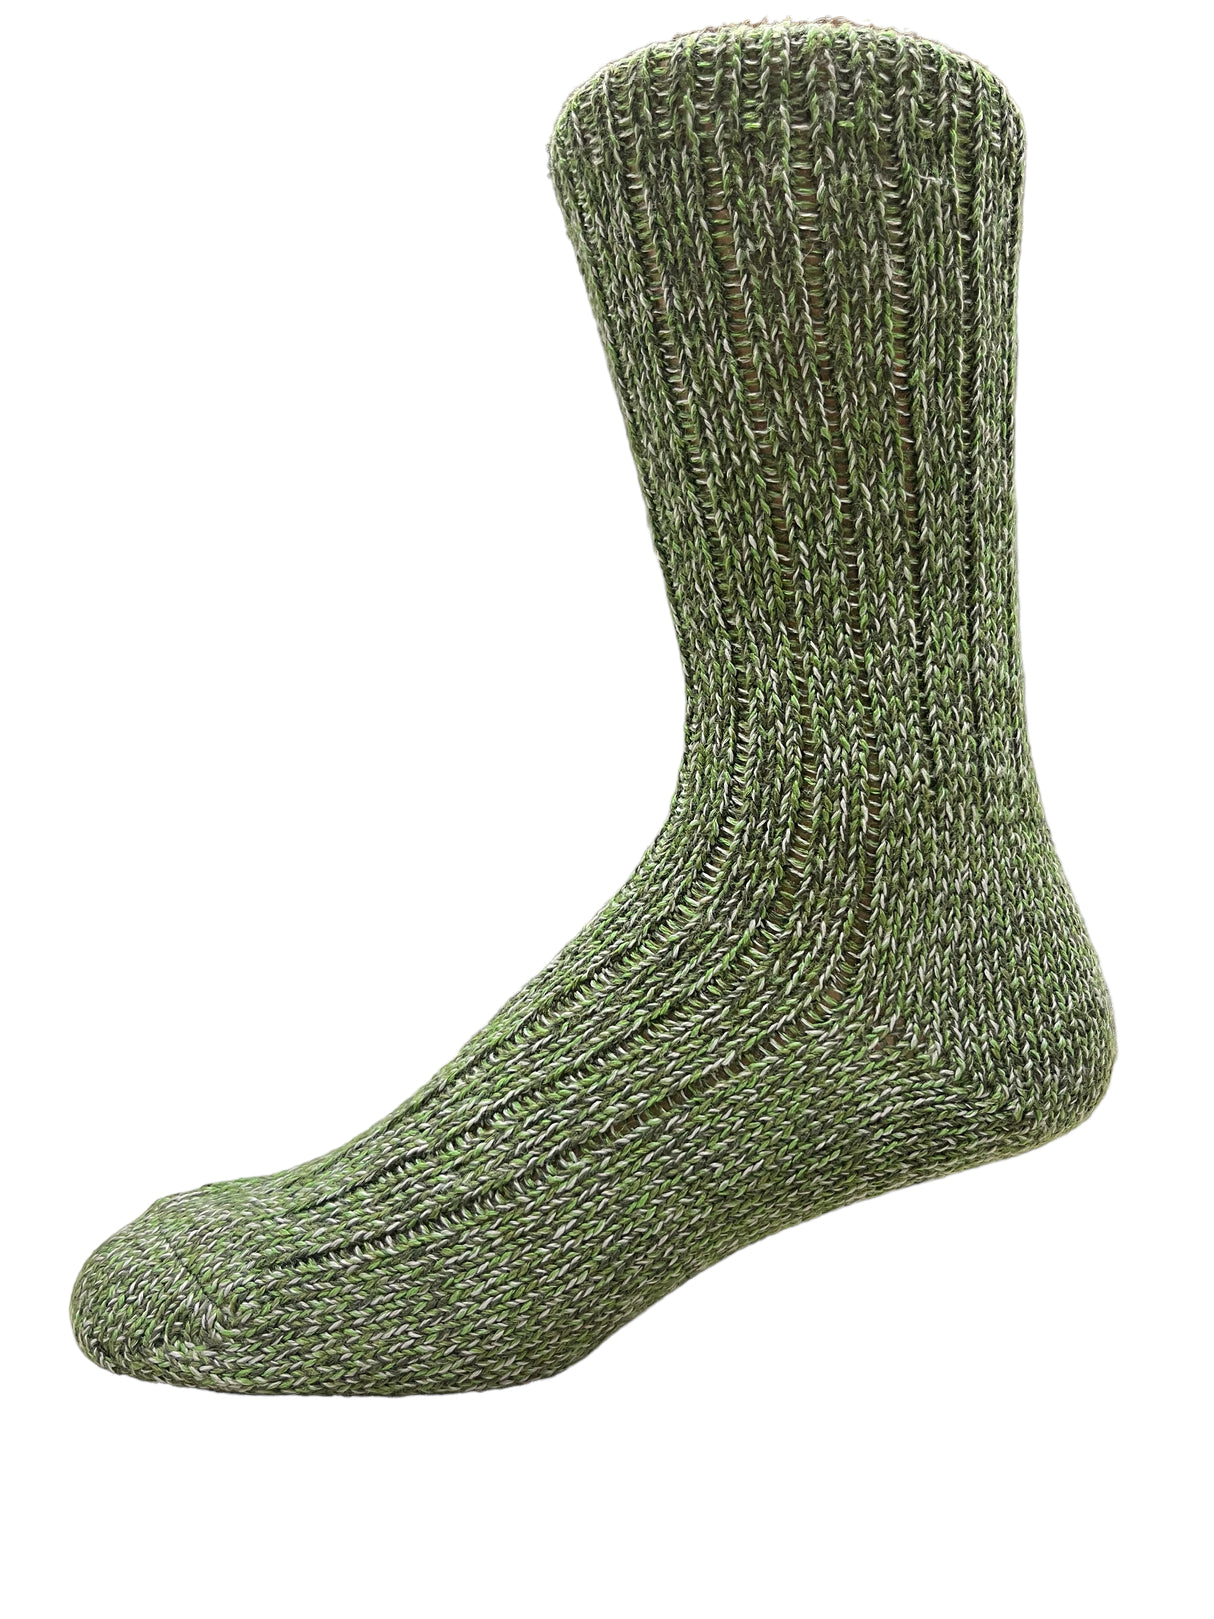 Super Soft Irish Heather Connemara Wool Socks